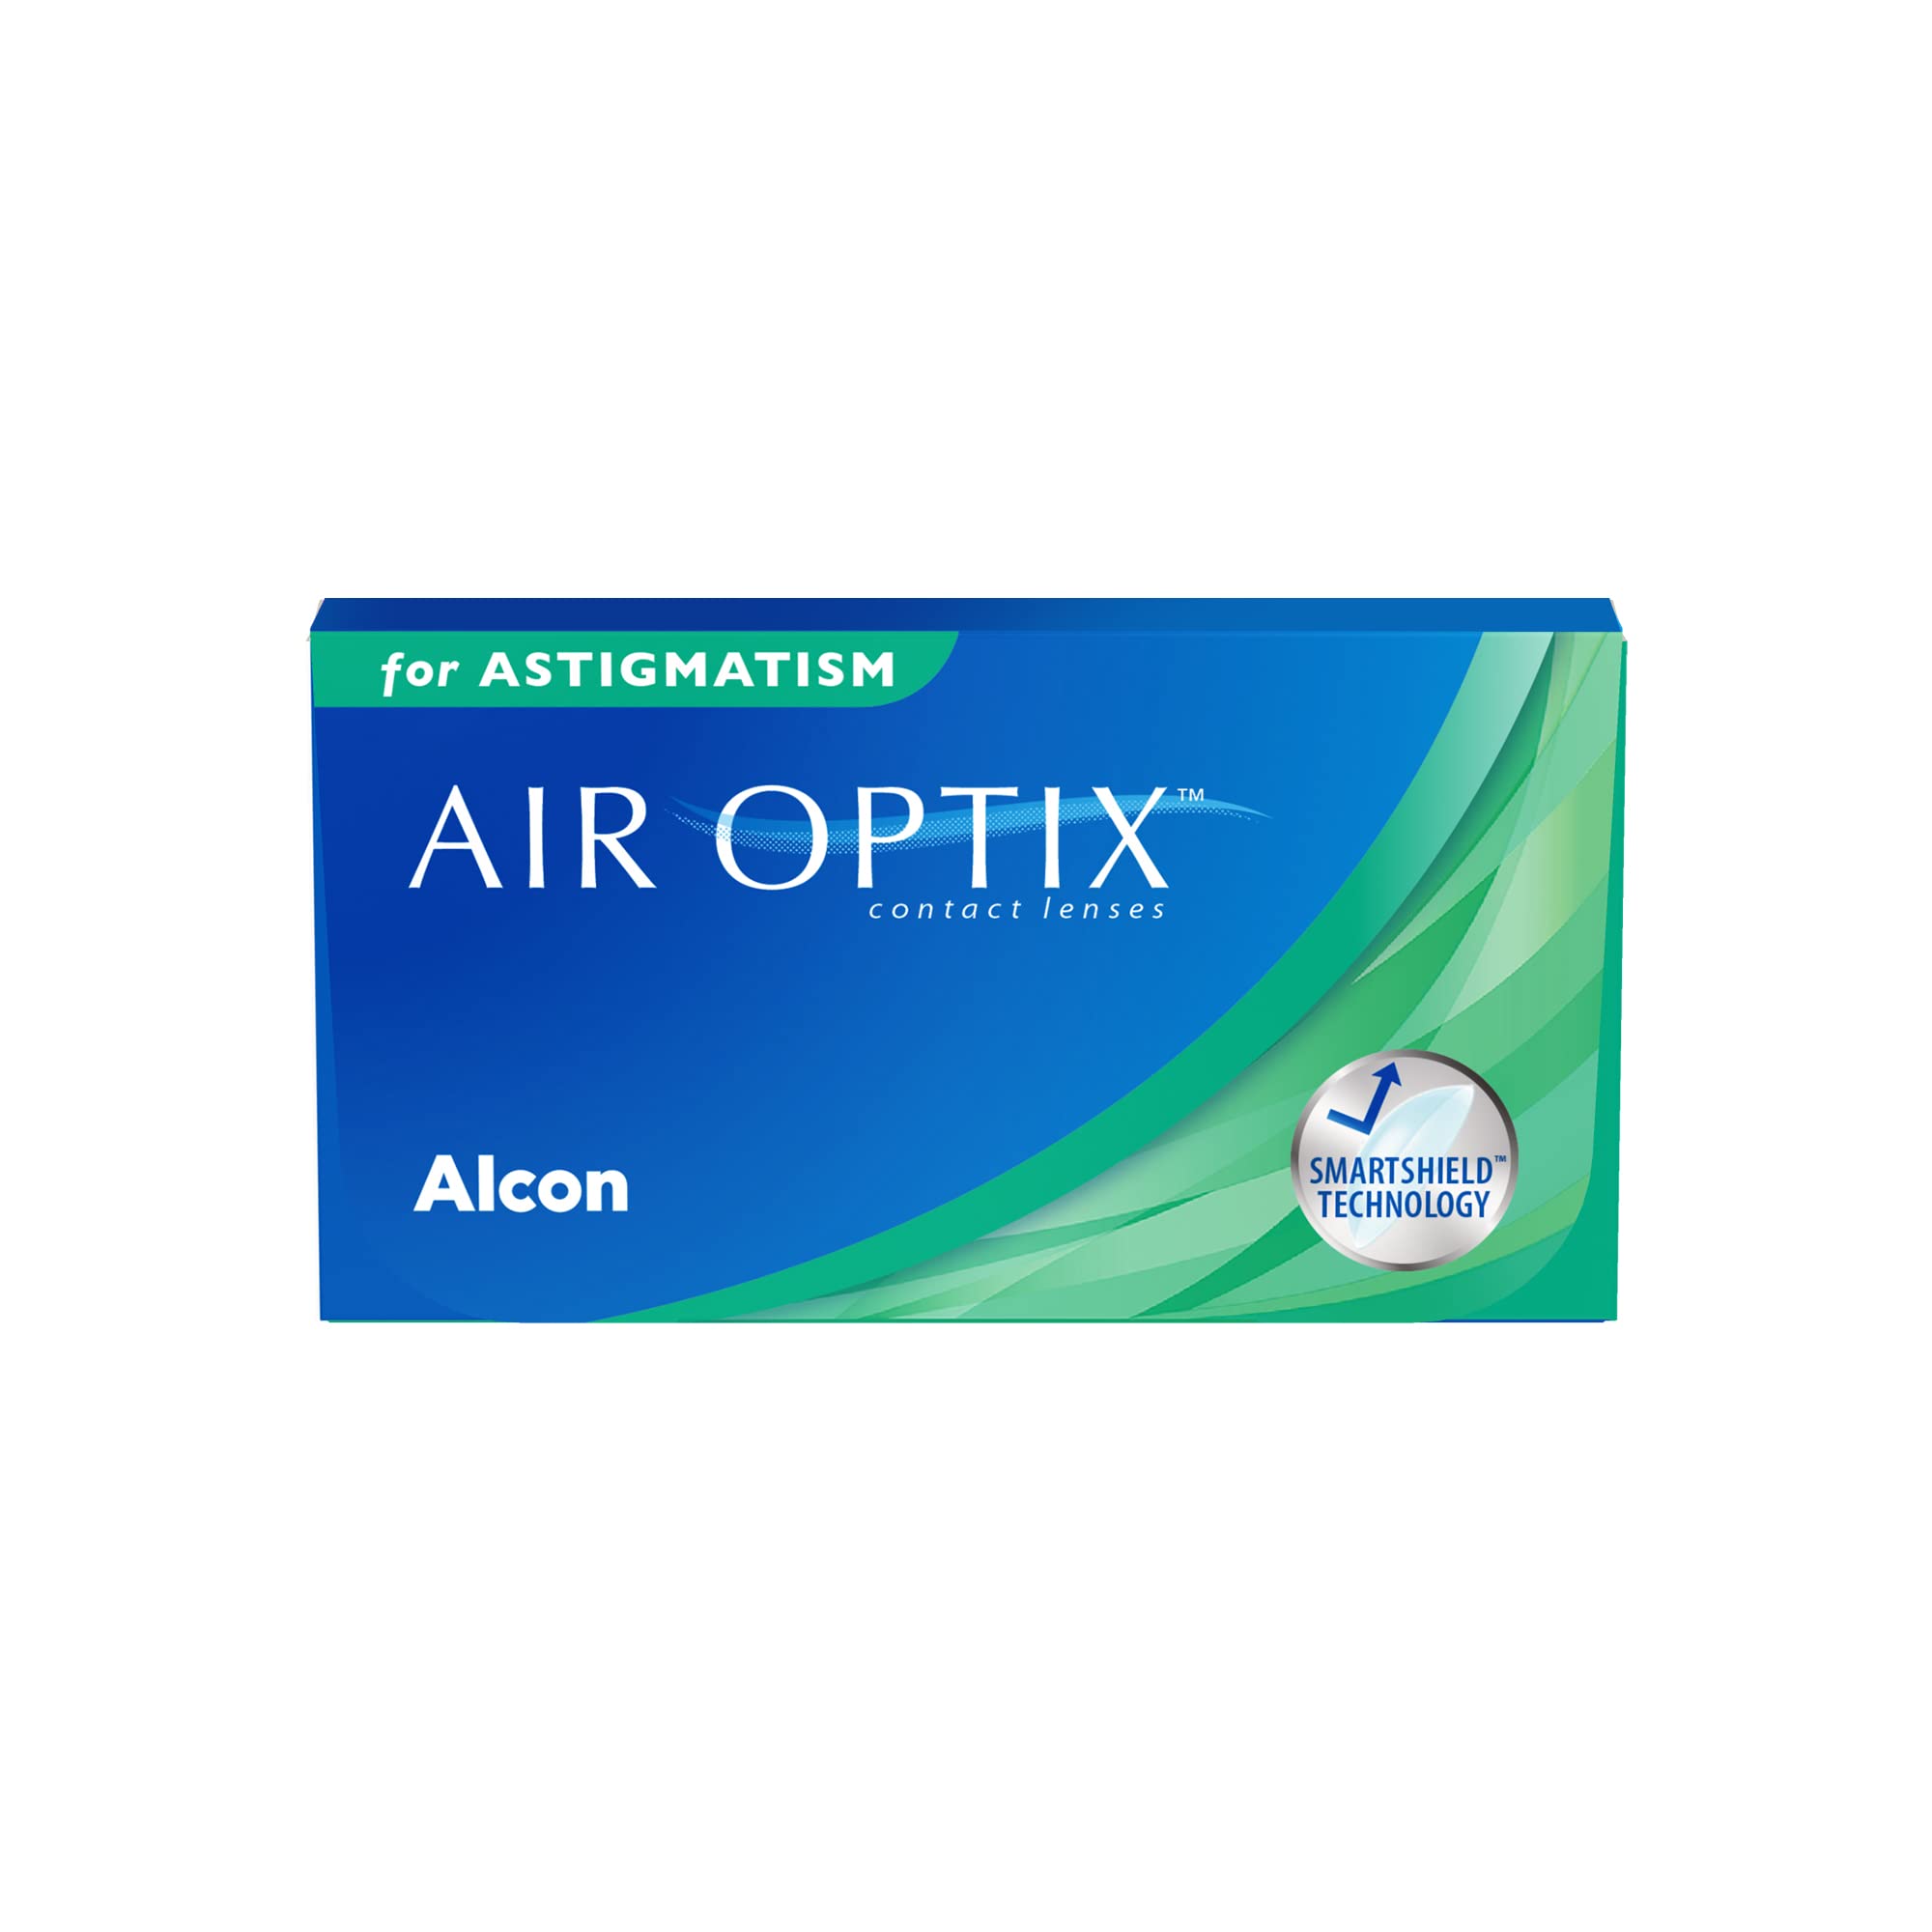 Air Optix for Astigmatism Monatslinsen weich, 6 Stück, BC 8.7 mm, DIA 14.5 mm, CYL -1.75, ACHSE 100, + 4.75 Dioptrien